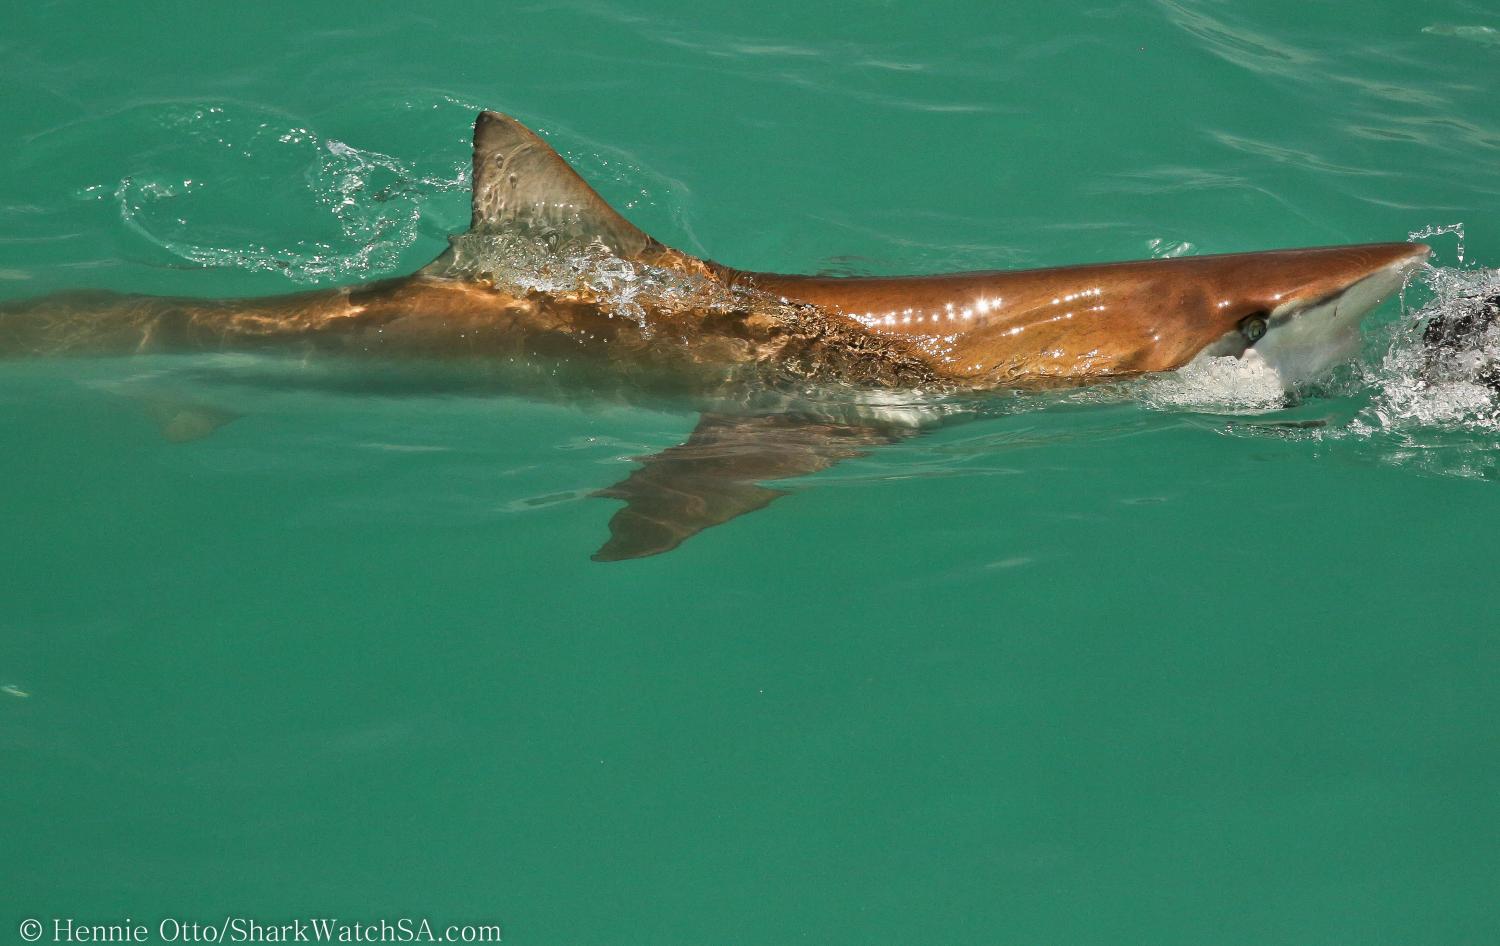 © Hennie Otto - Marine Dynamics Shark Tours - www.sharkwatchsa.com